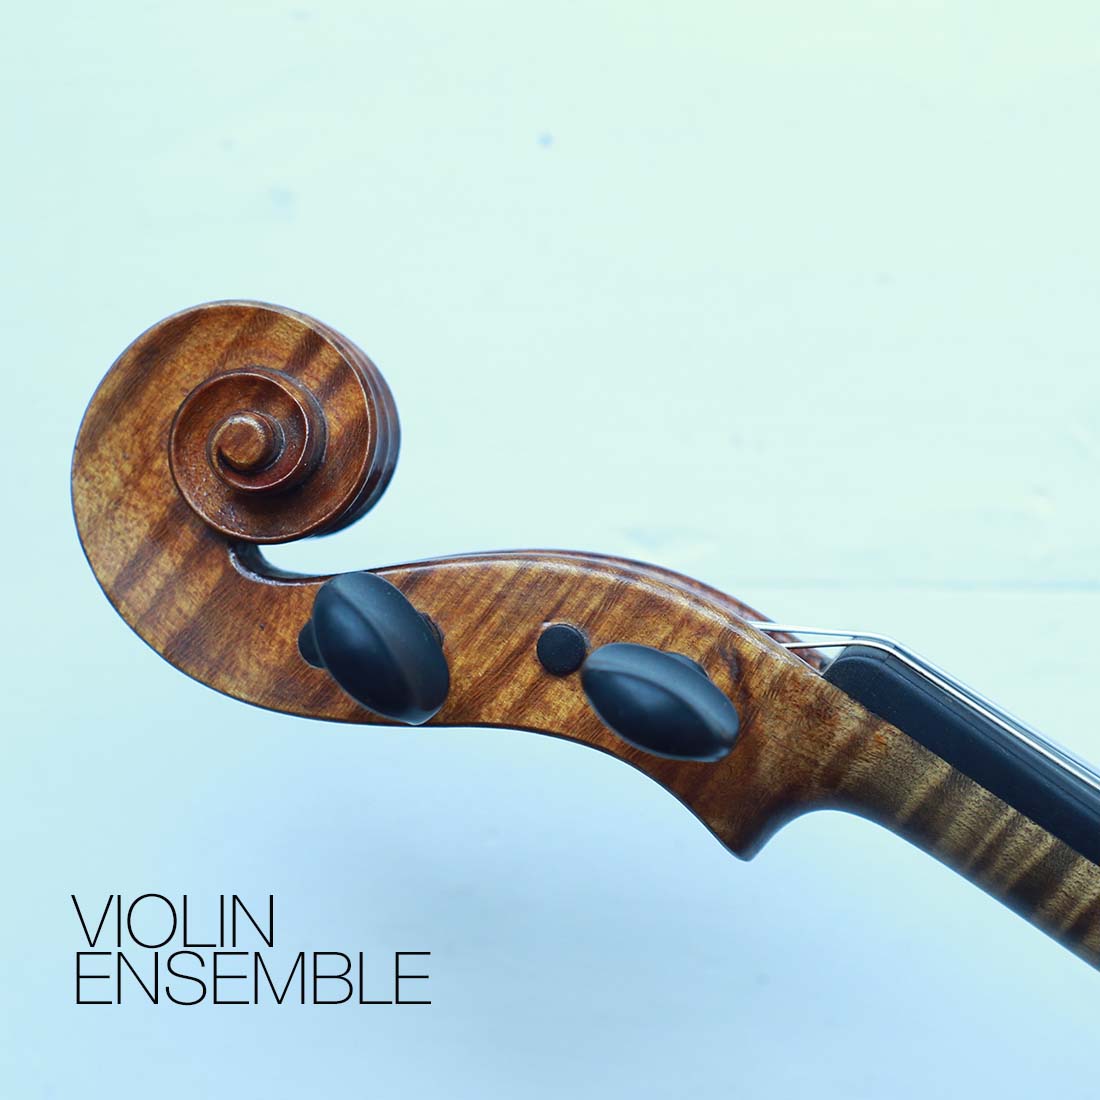 Violin Ensemble Cover Art Idea 3 1